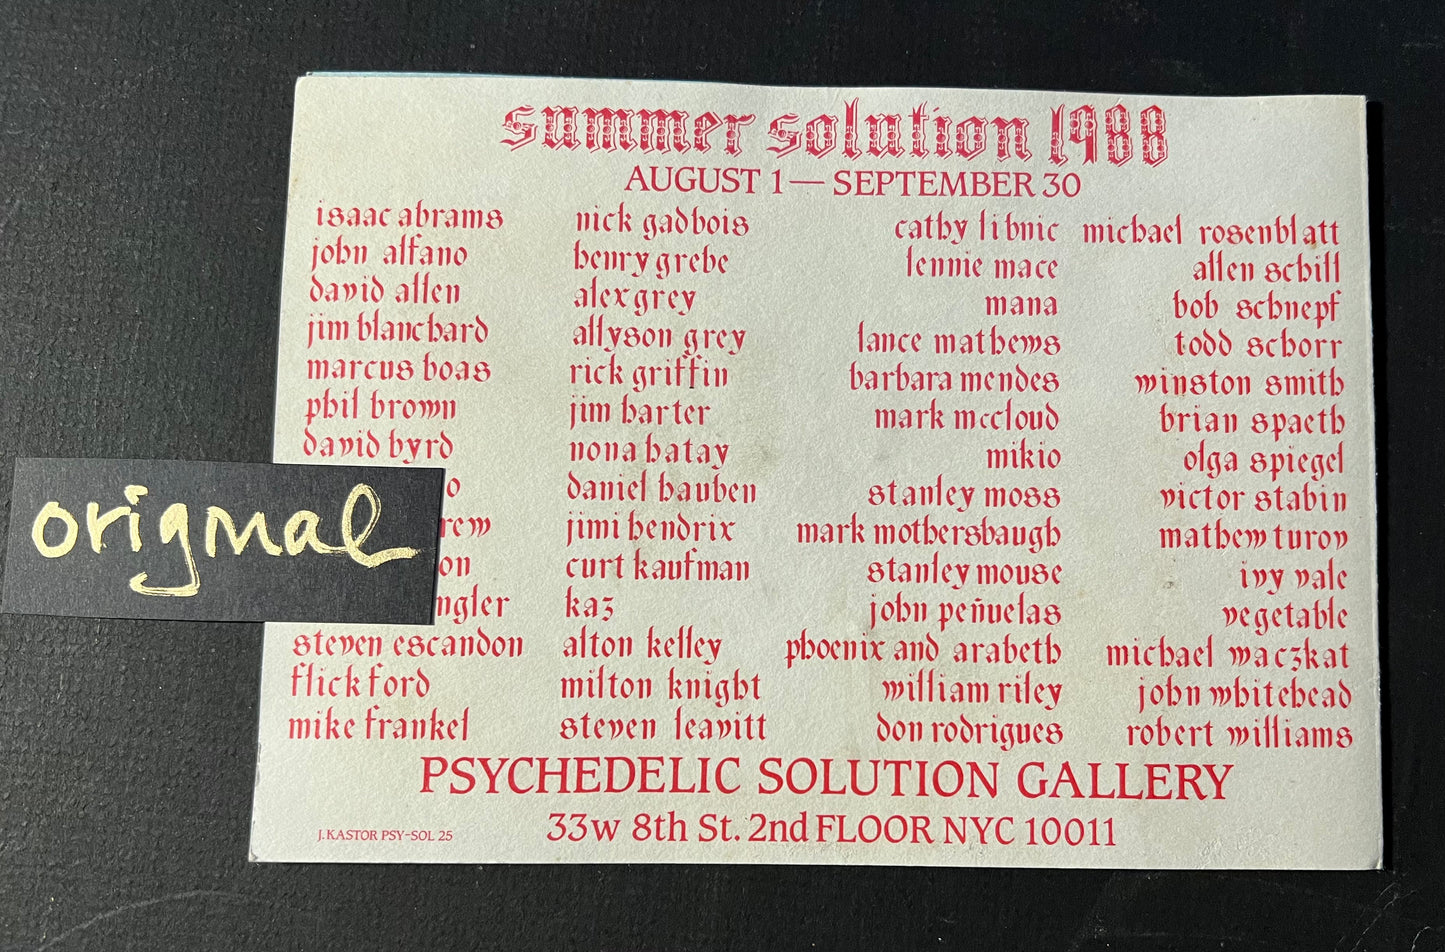 Psychedelic Solution Gallery Exhibit Invitation - Nona Hatay 1988